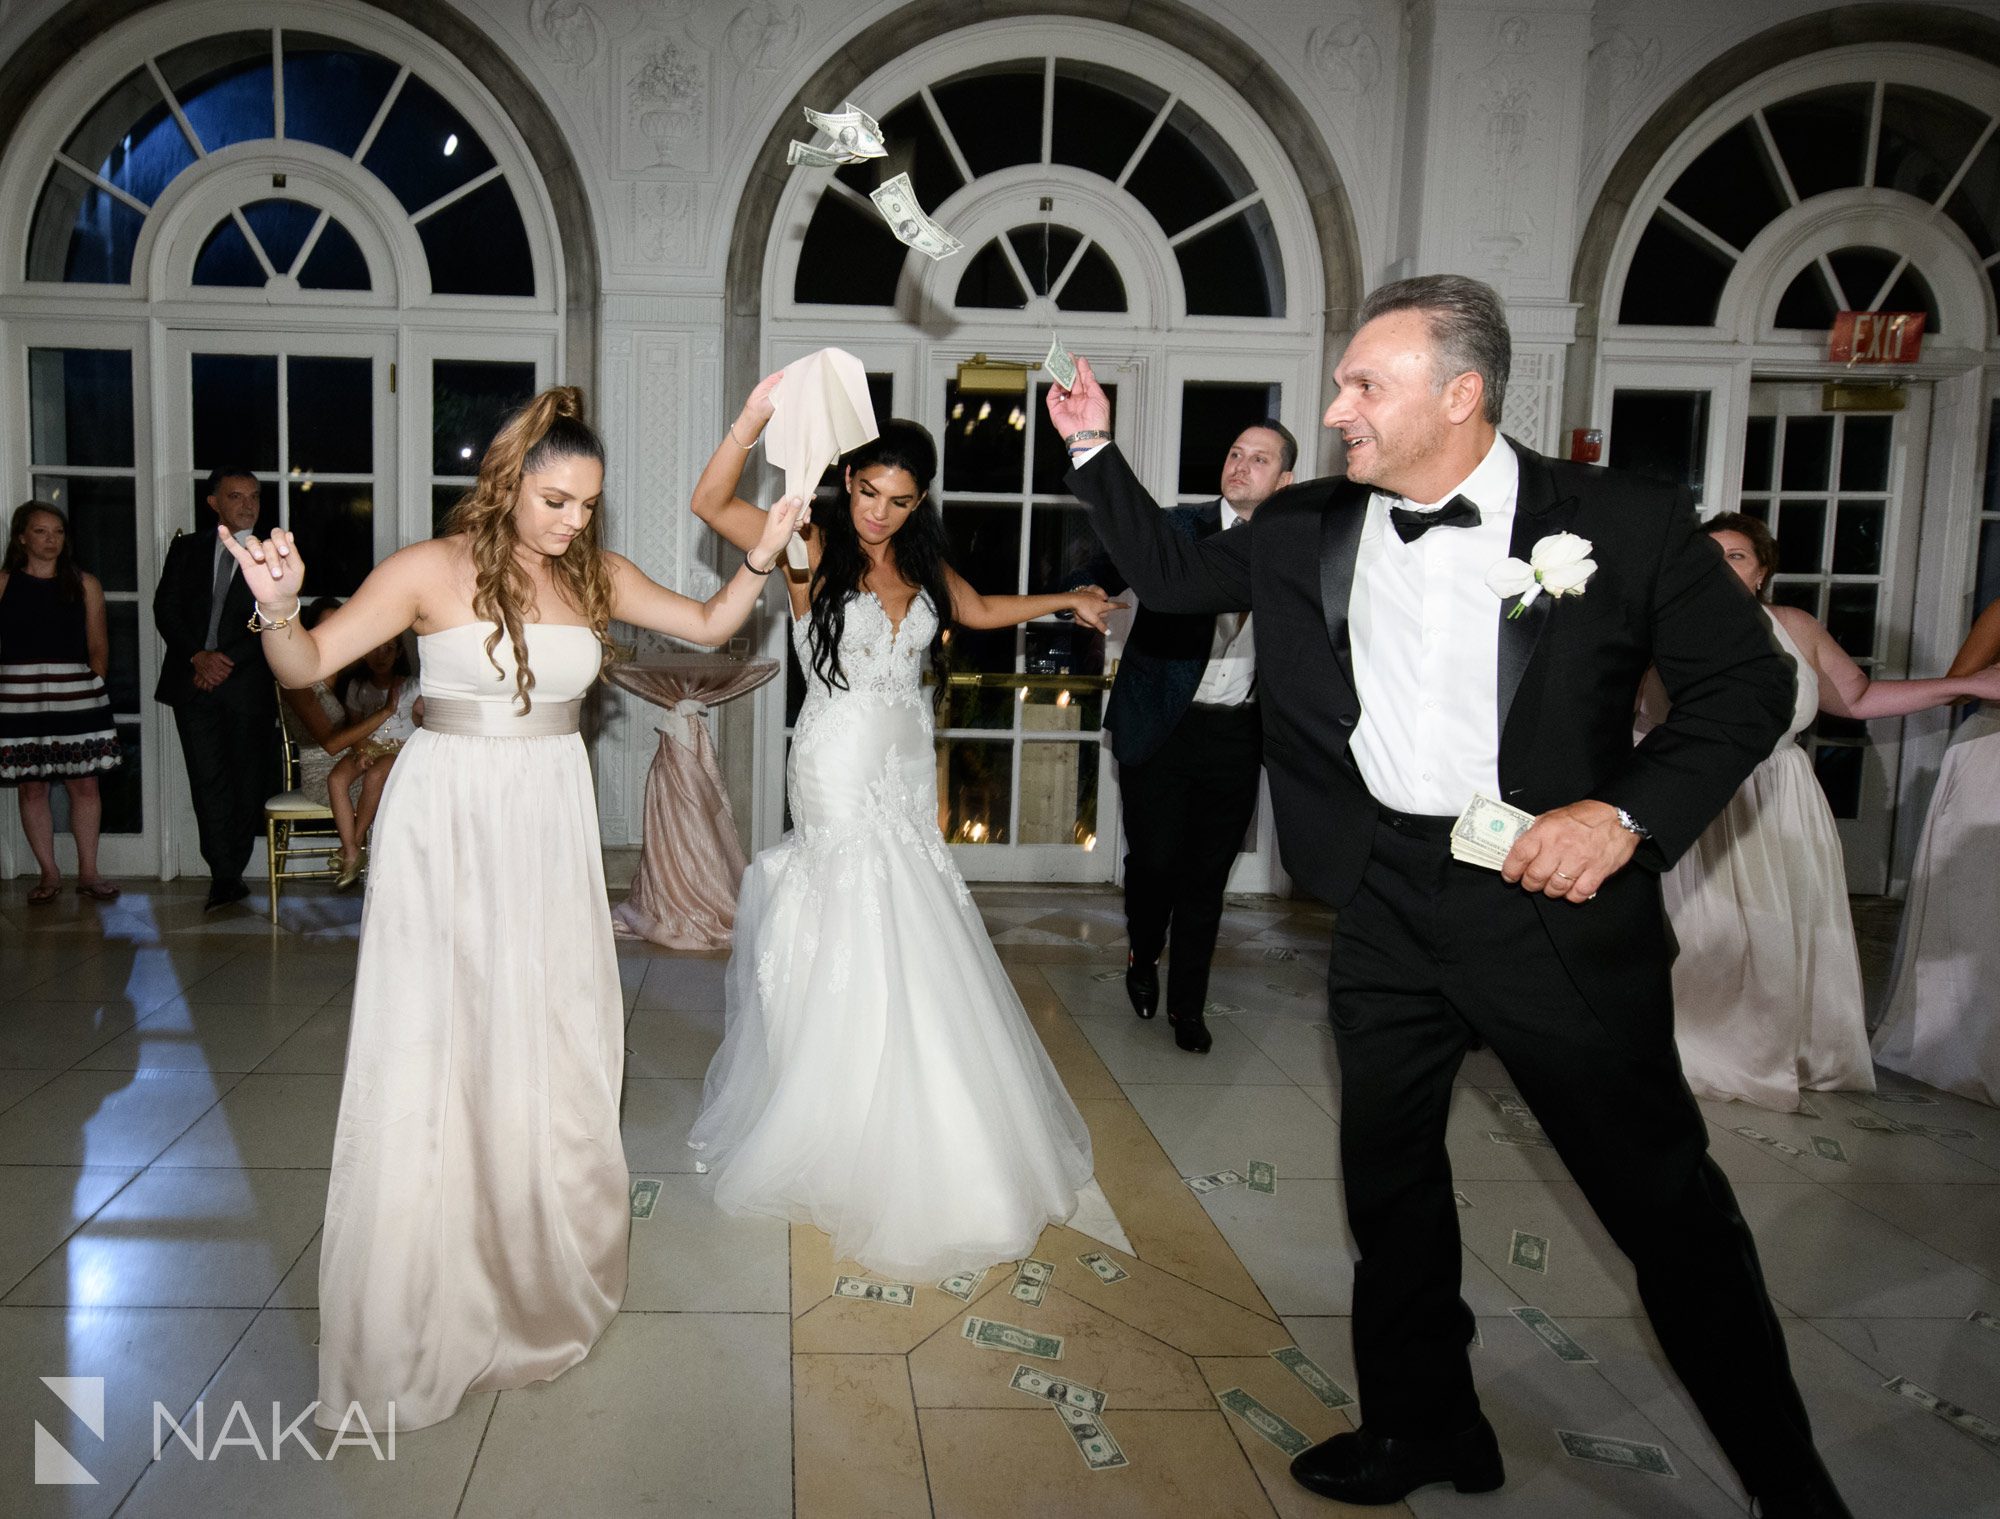 greek wedding reception pictures dancing Chicago